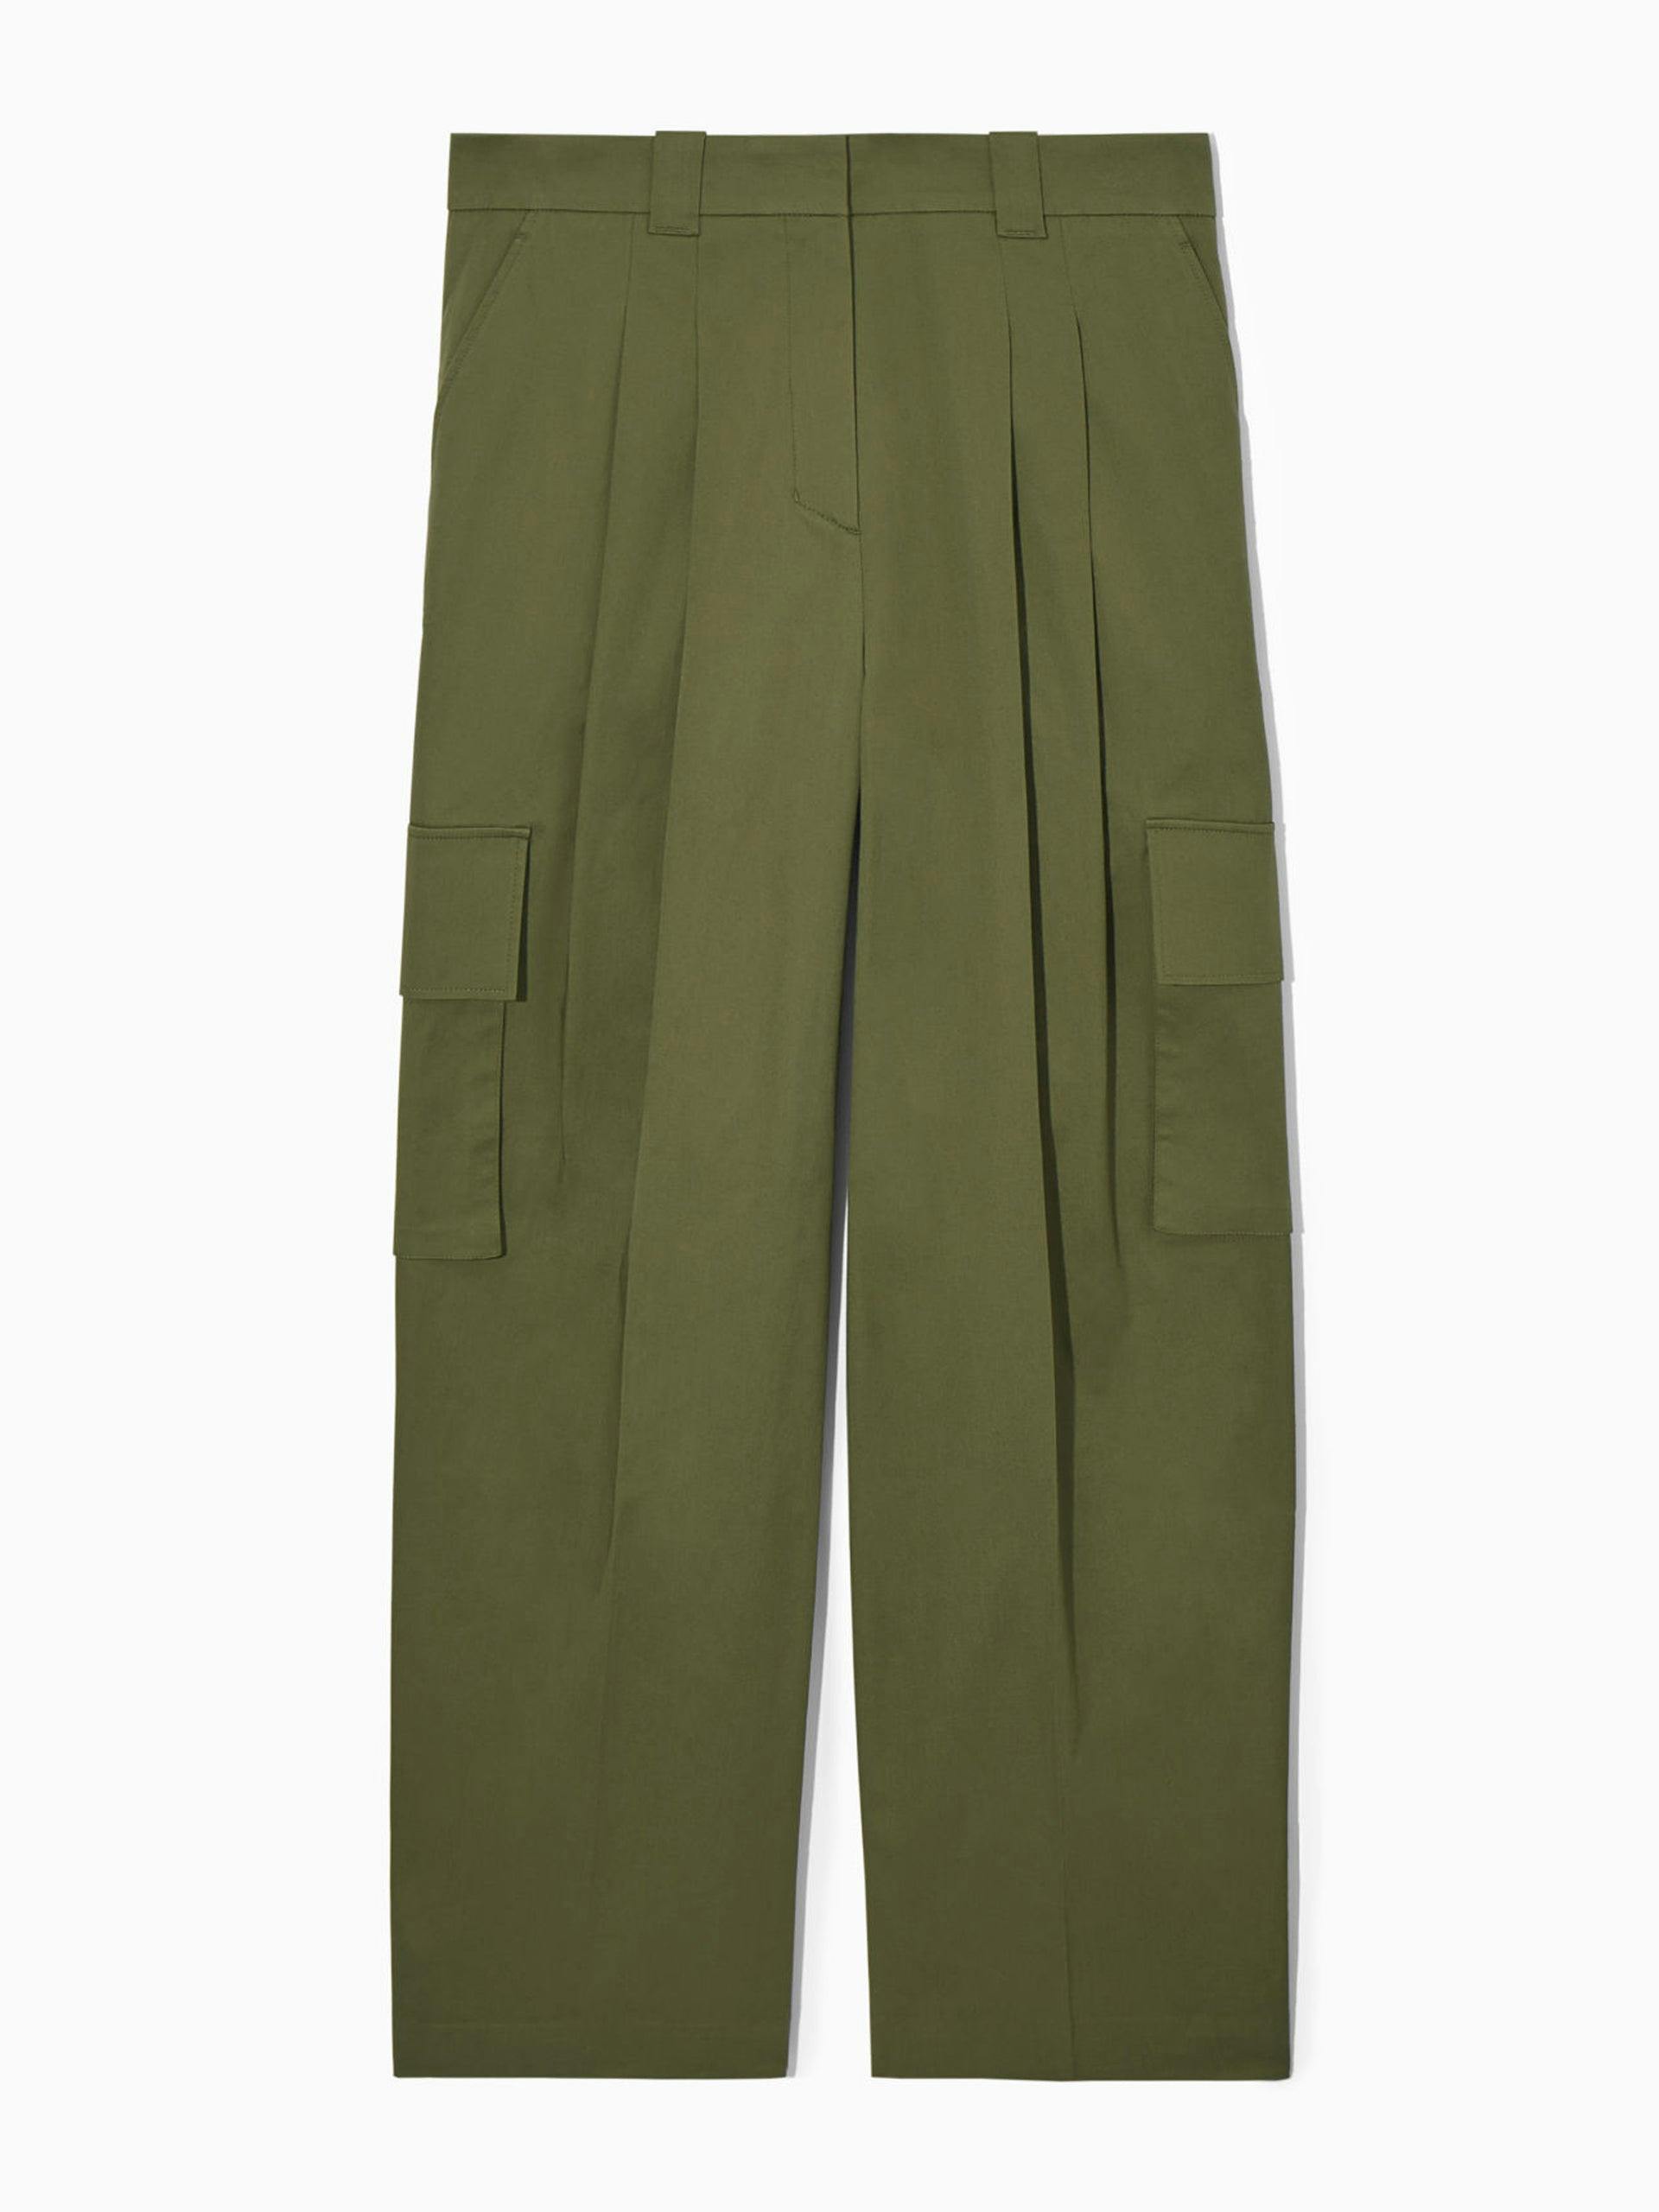 Khaki-green cargo trousers